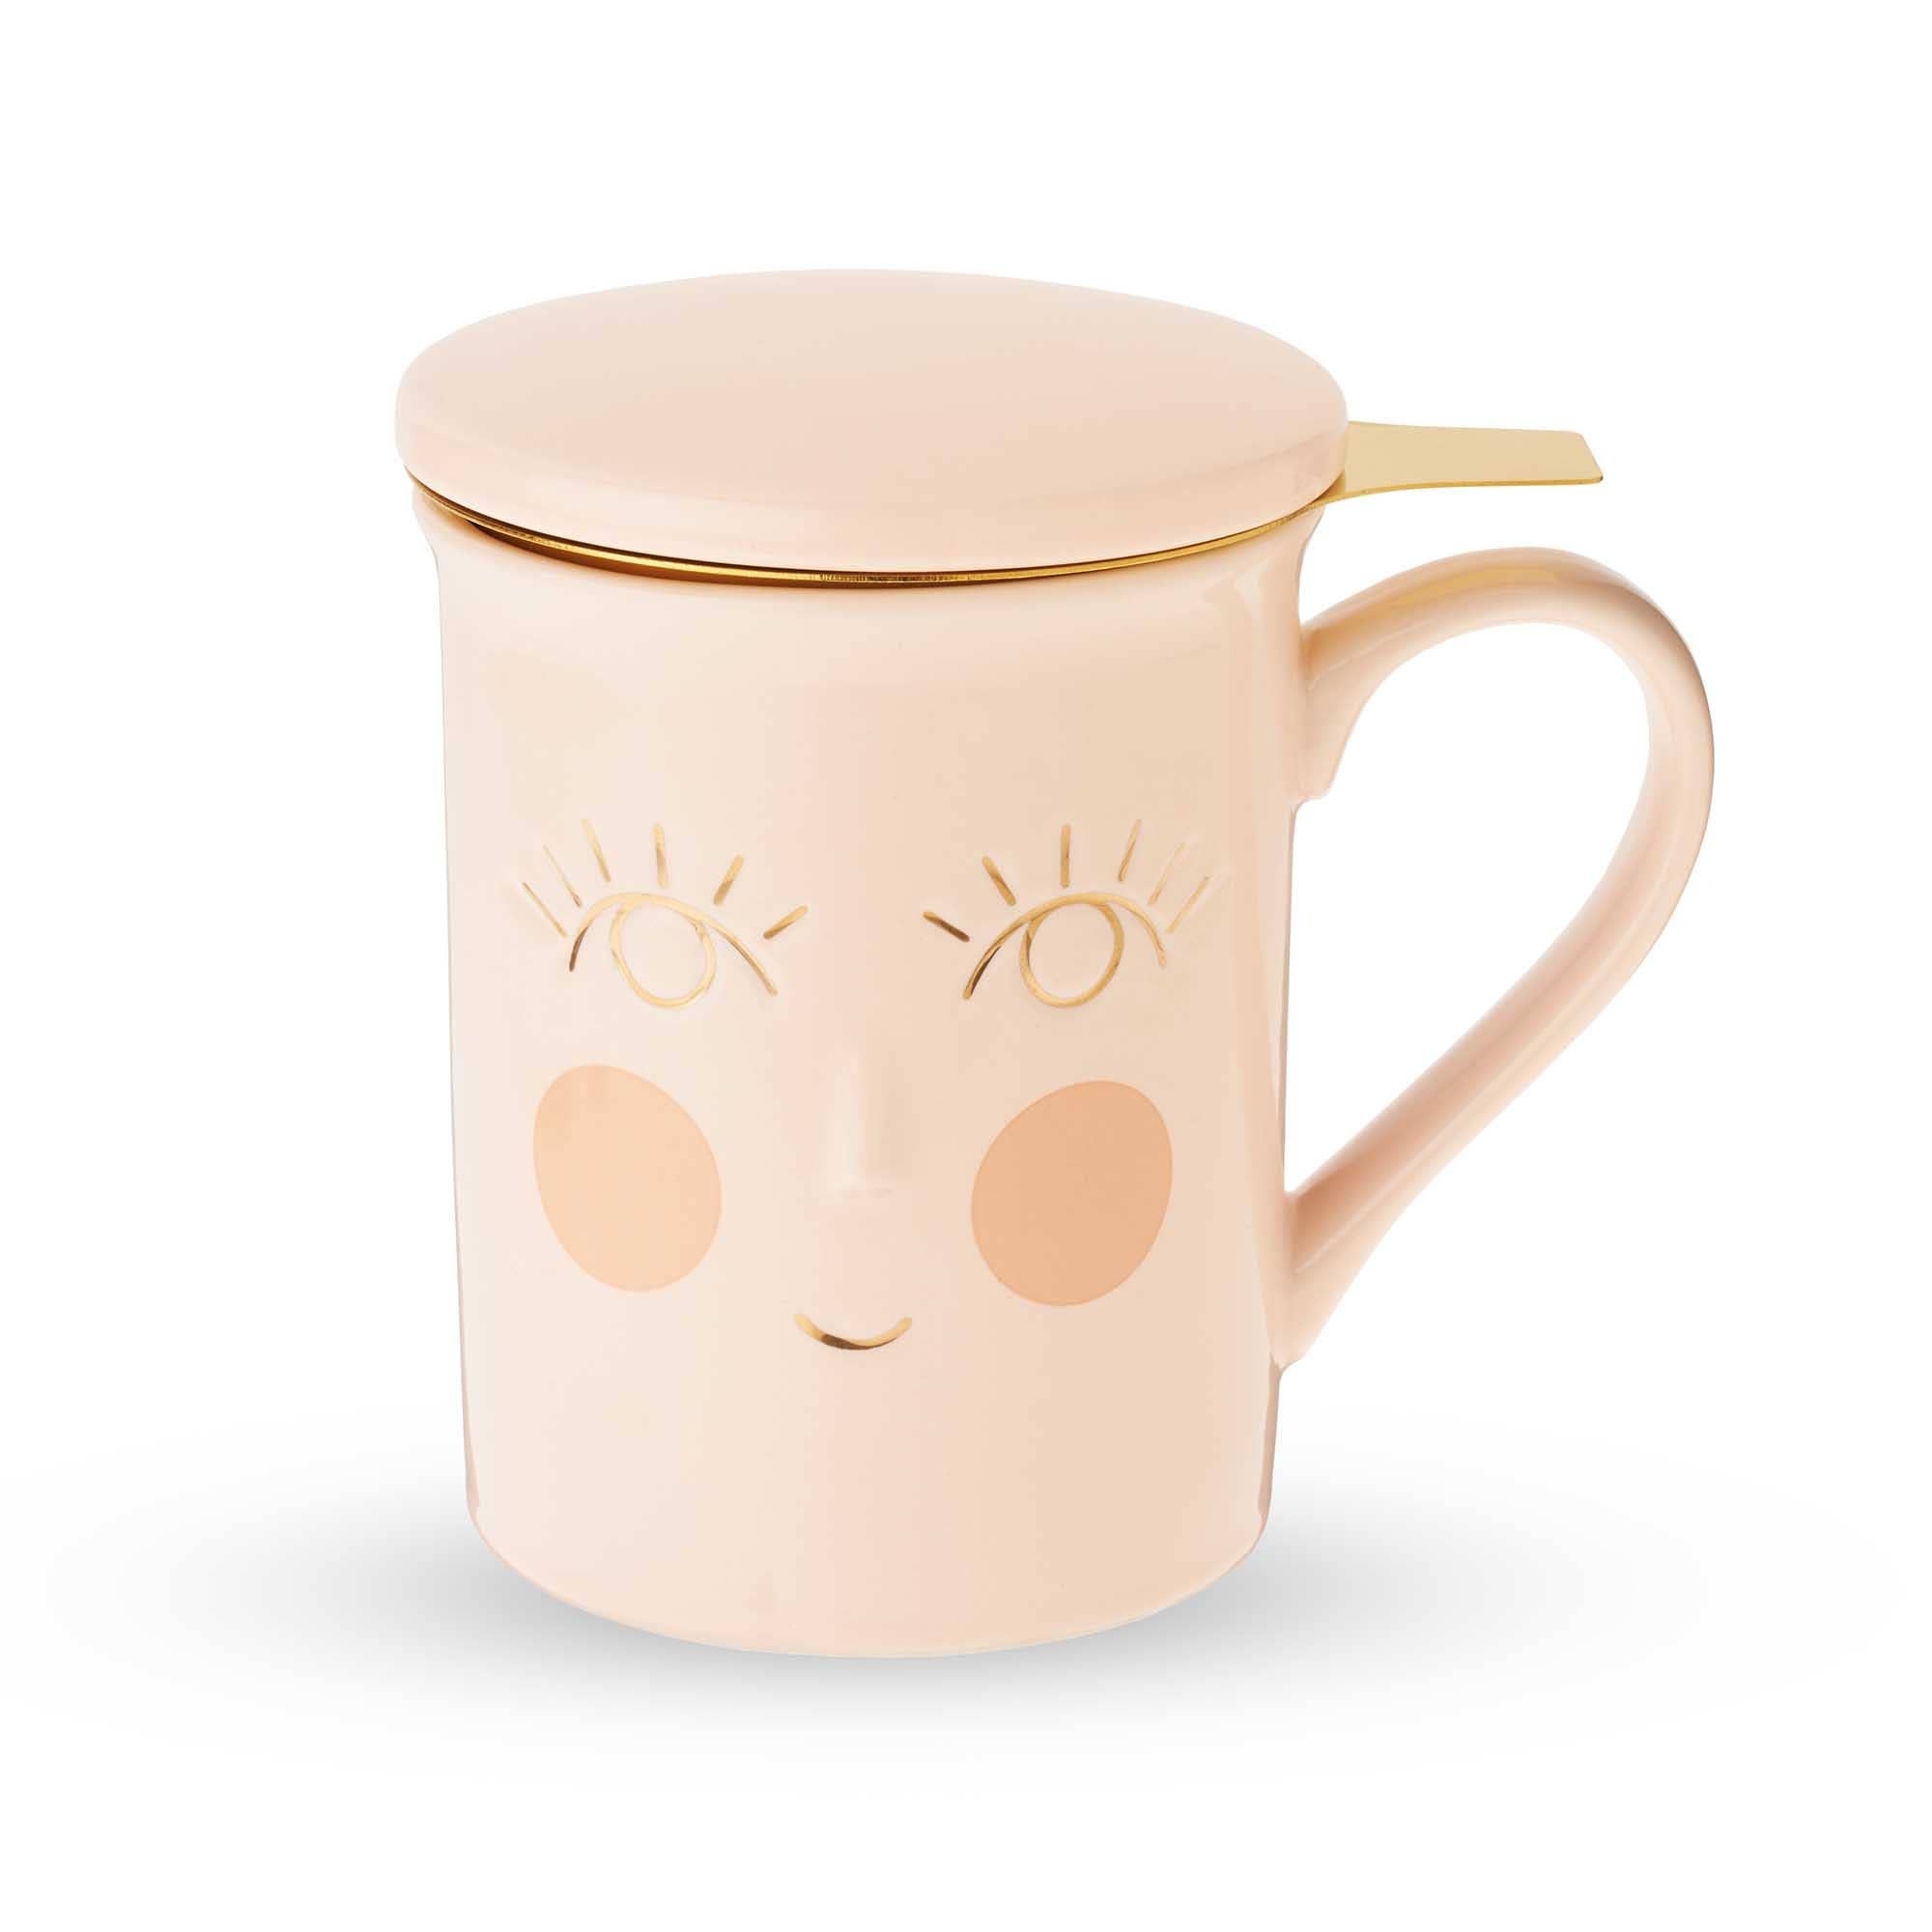 Pinky Up - Annette Hello Beautiful Ceramic Tea Mug & Infuser